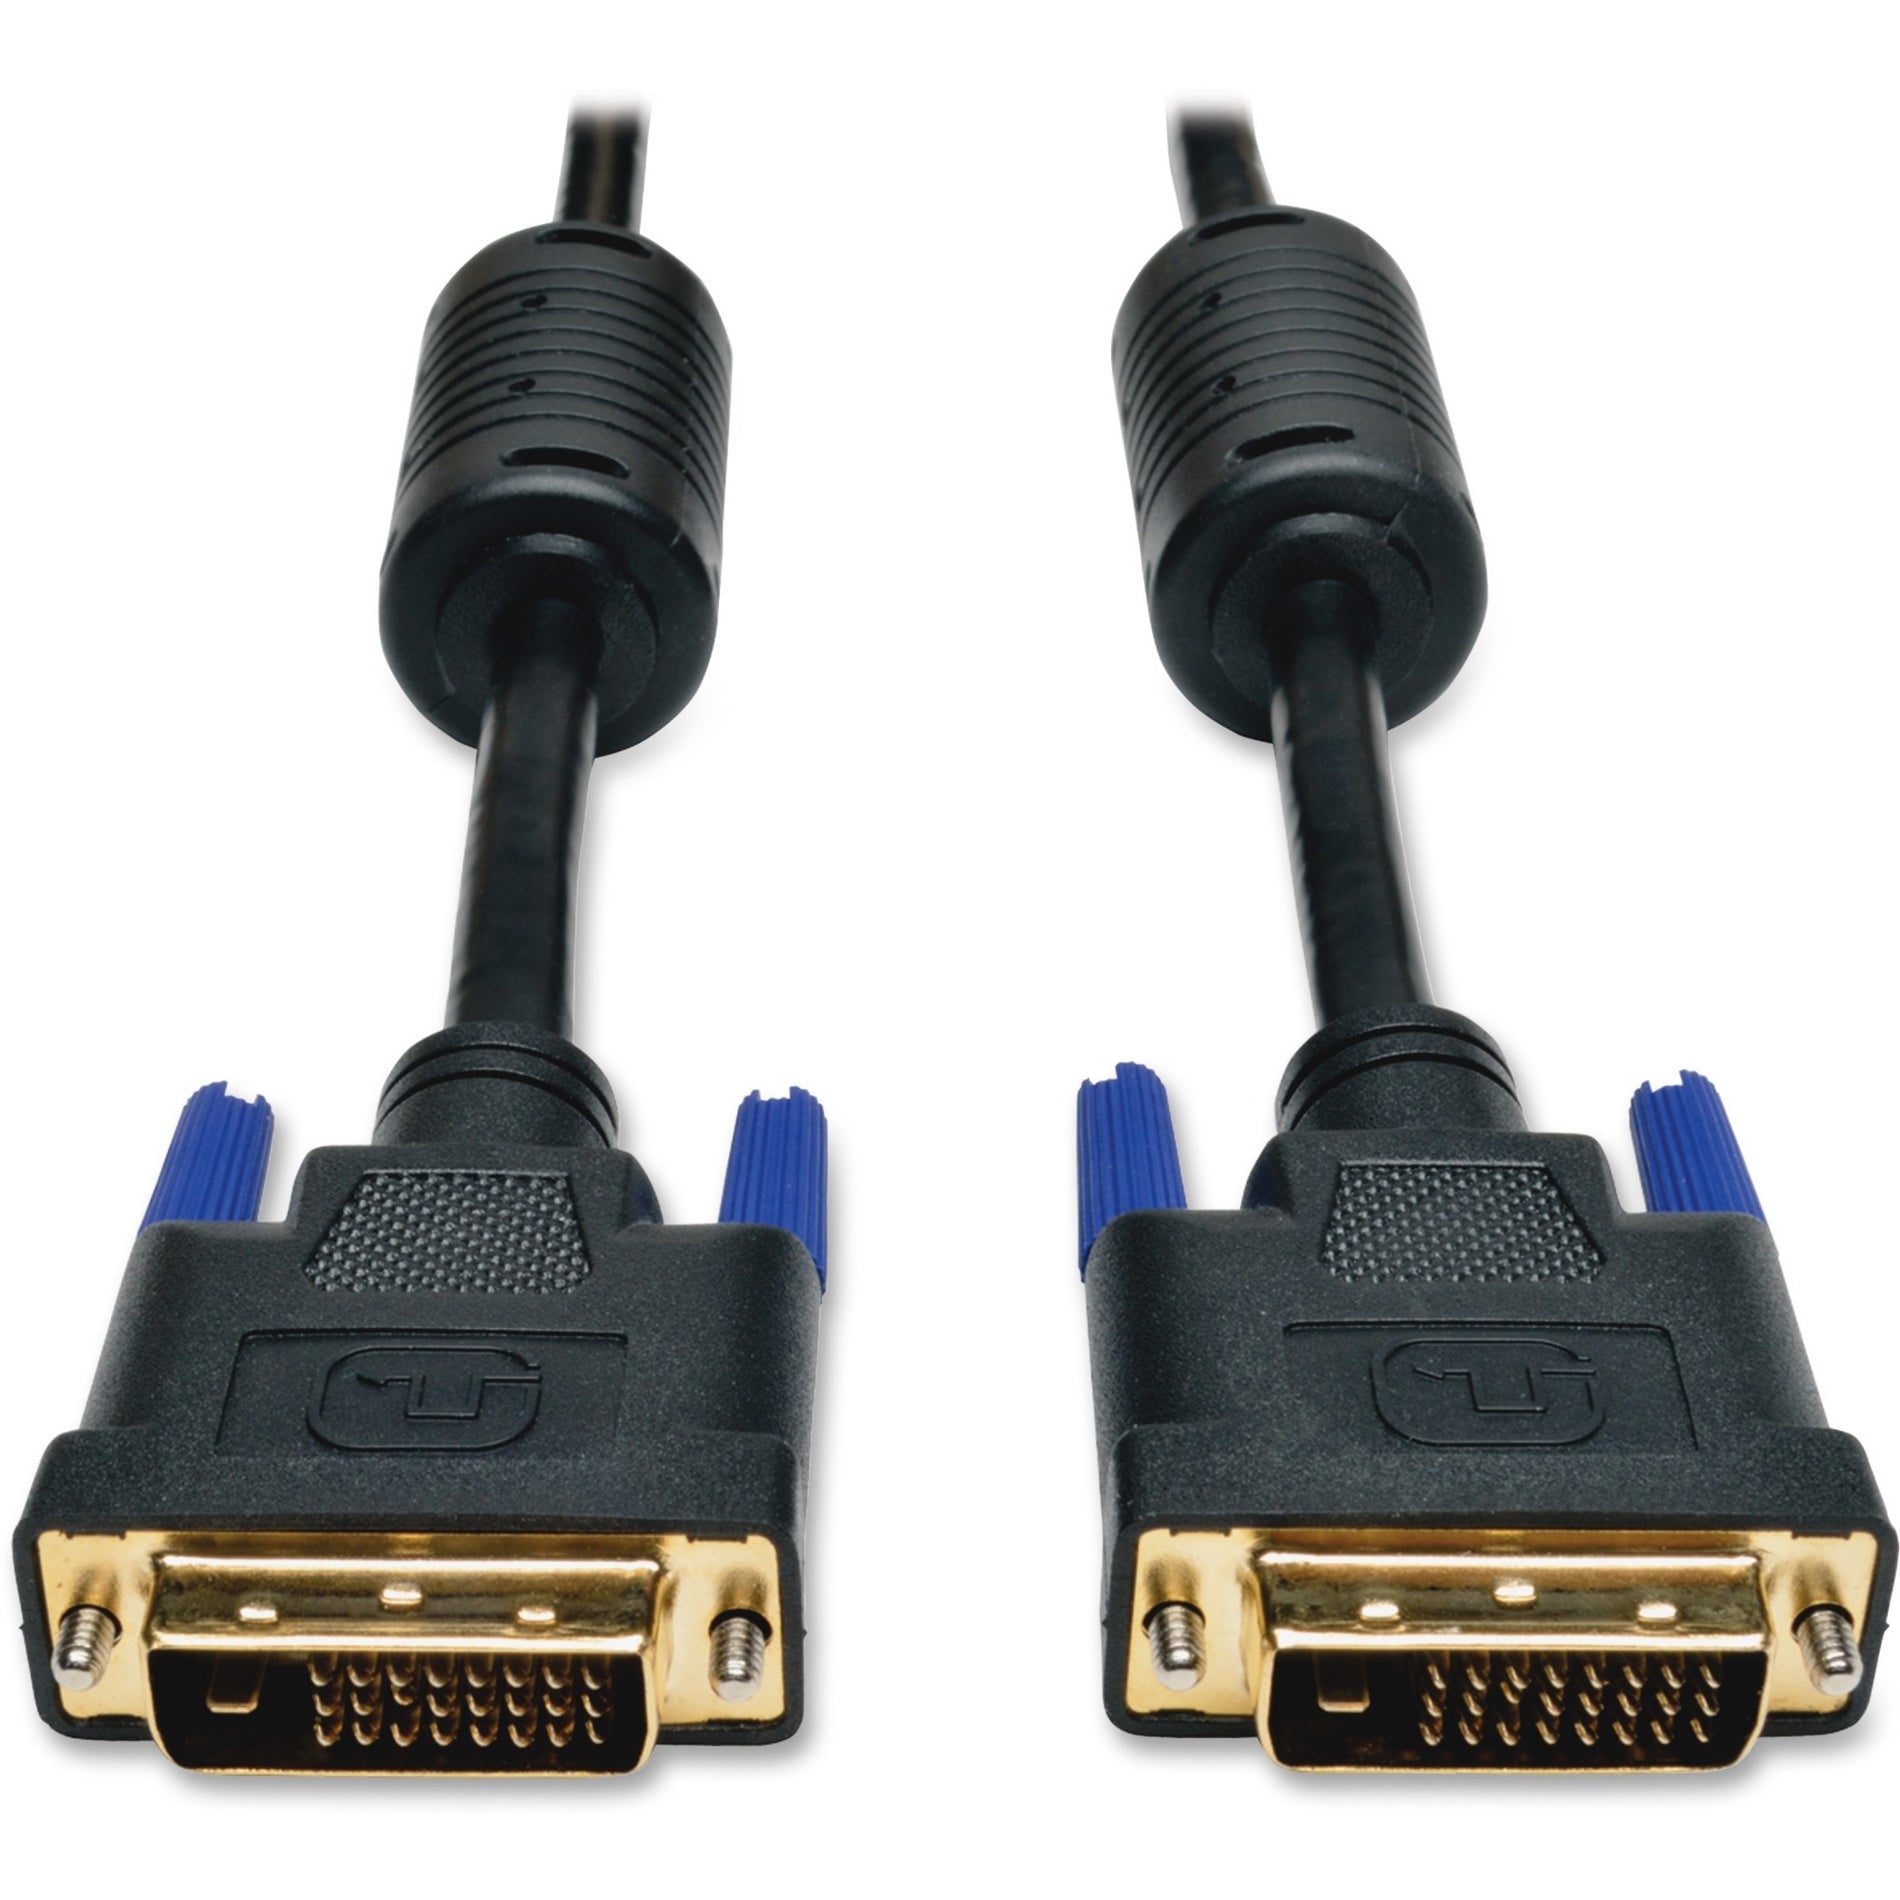 Tripp Lite P560-006 DVI双链路电缆，6英尺，黑色 Tripp Lite 的品牌名称翻译成中文为：特力品。